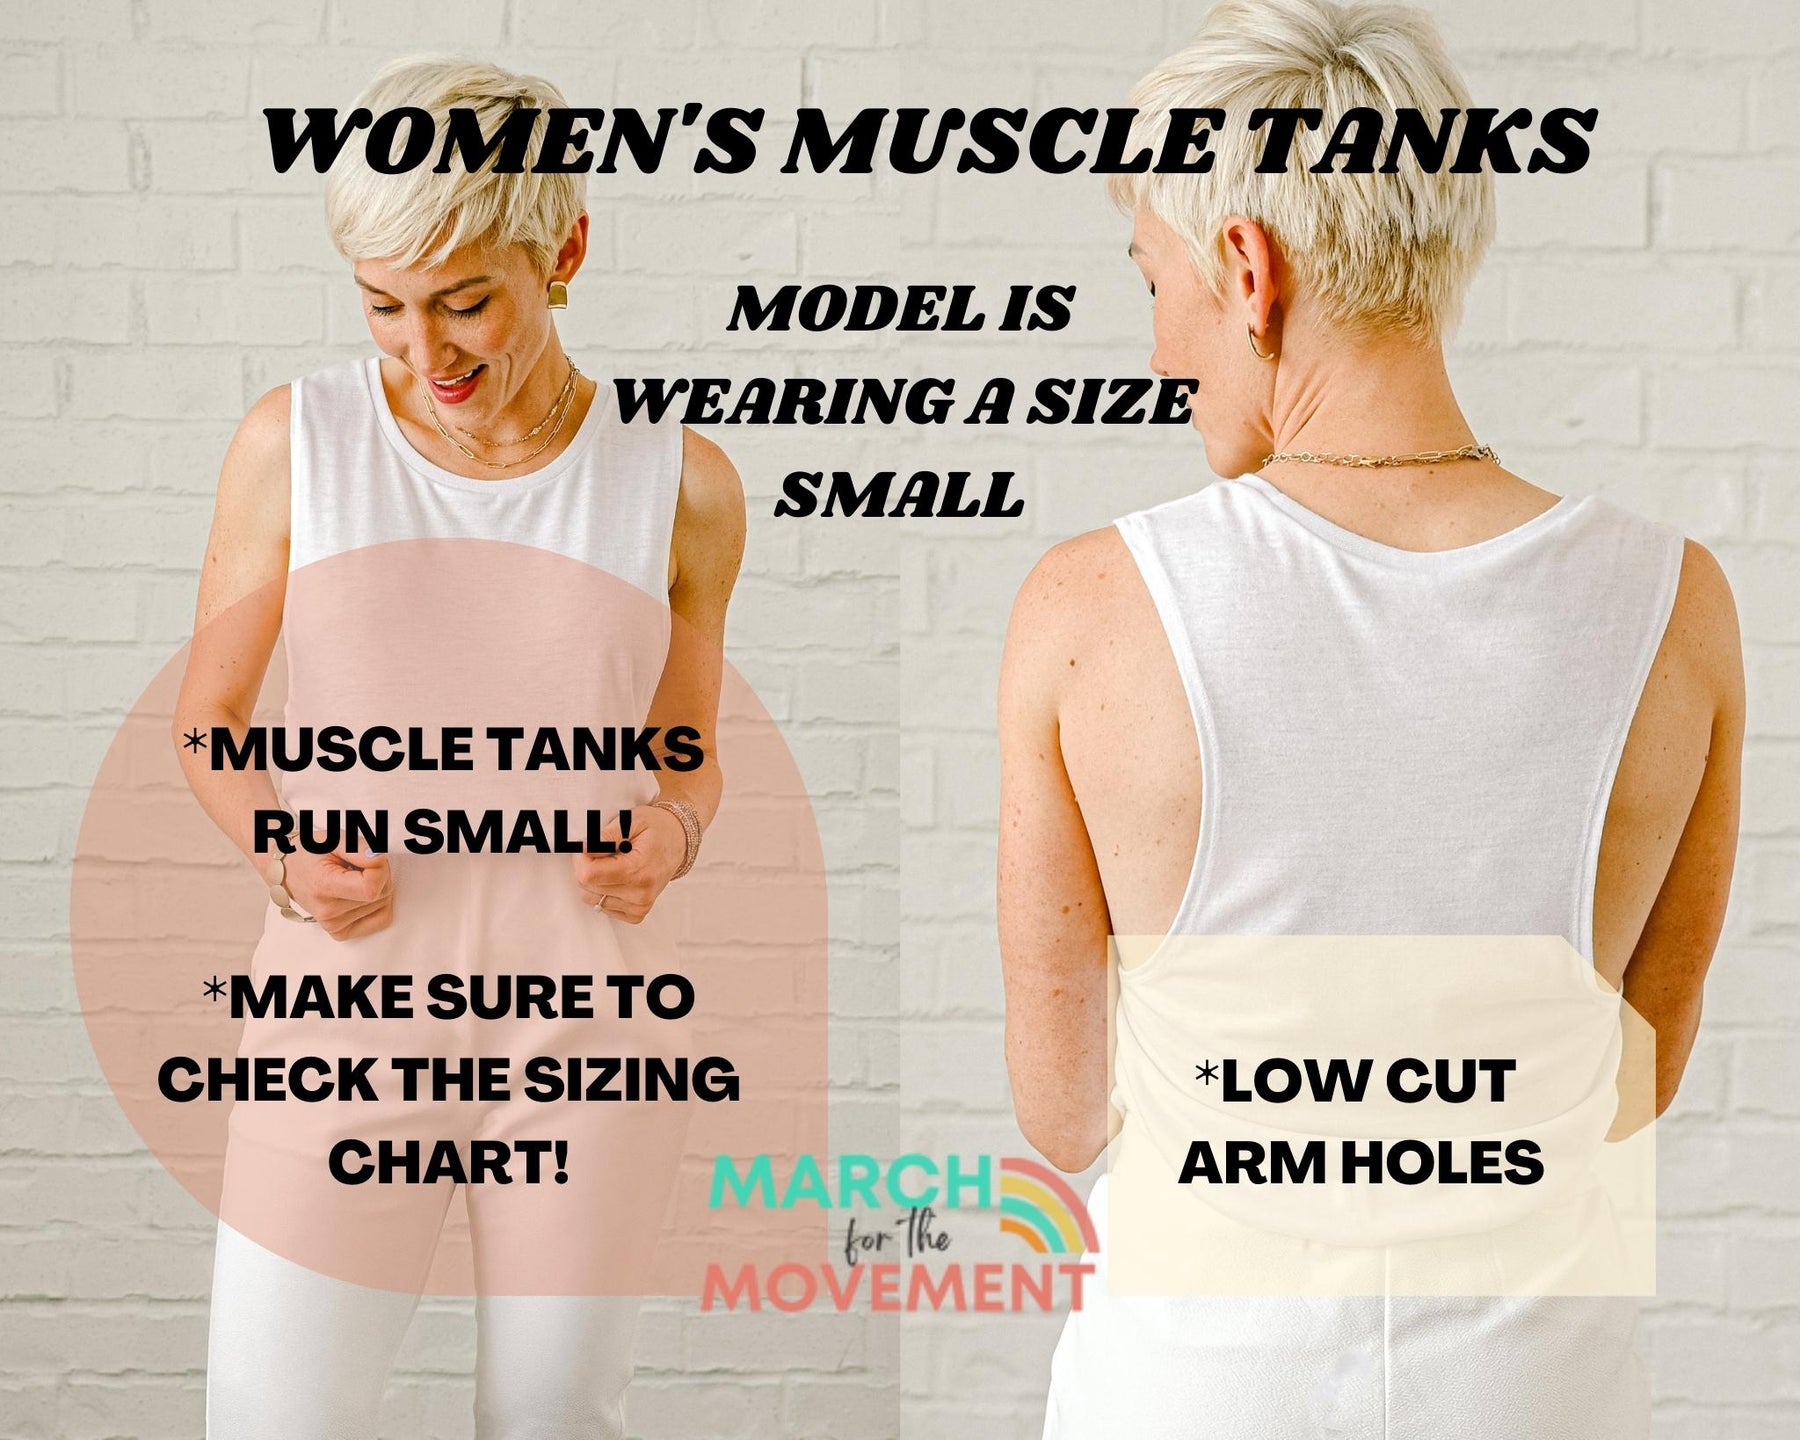 My Body My Choice Women's Muscle Tank